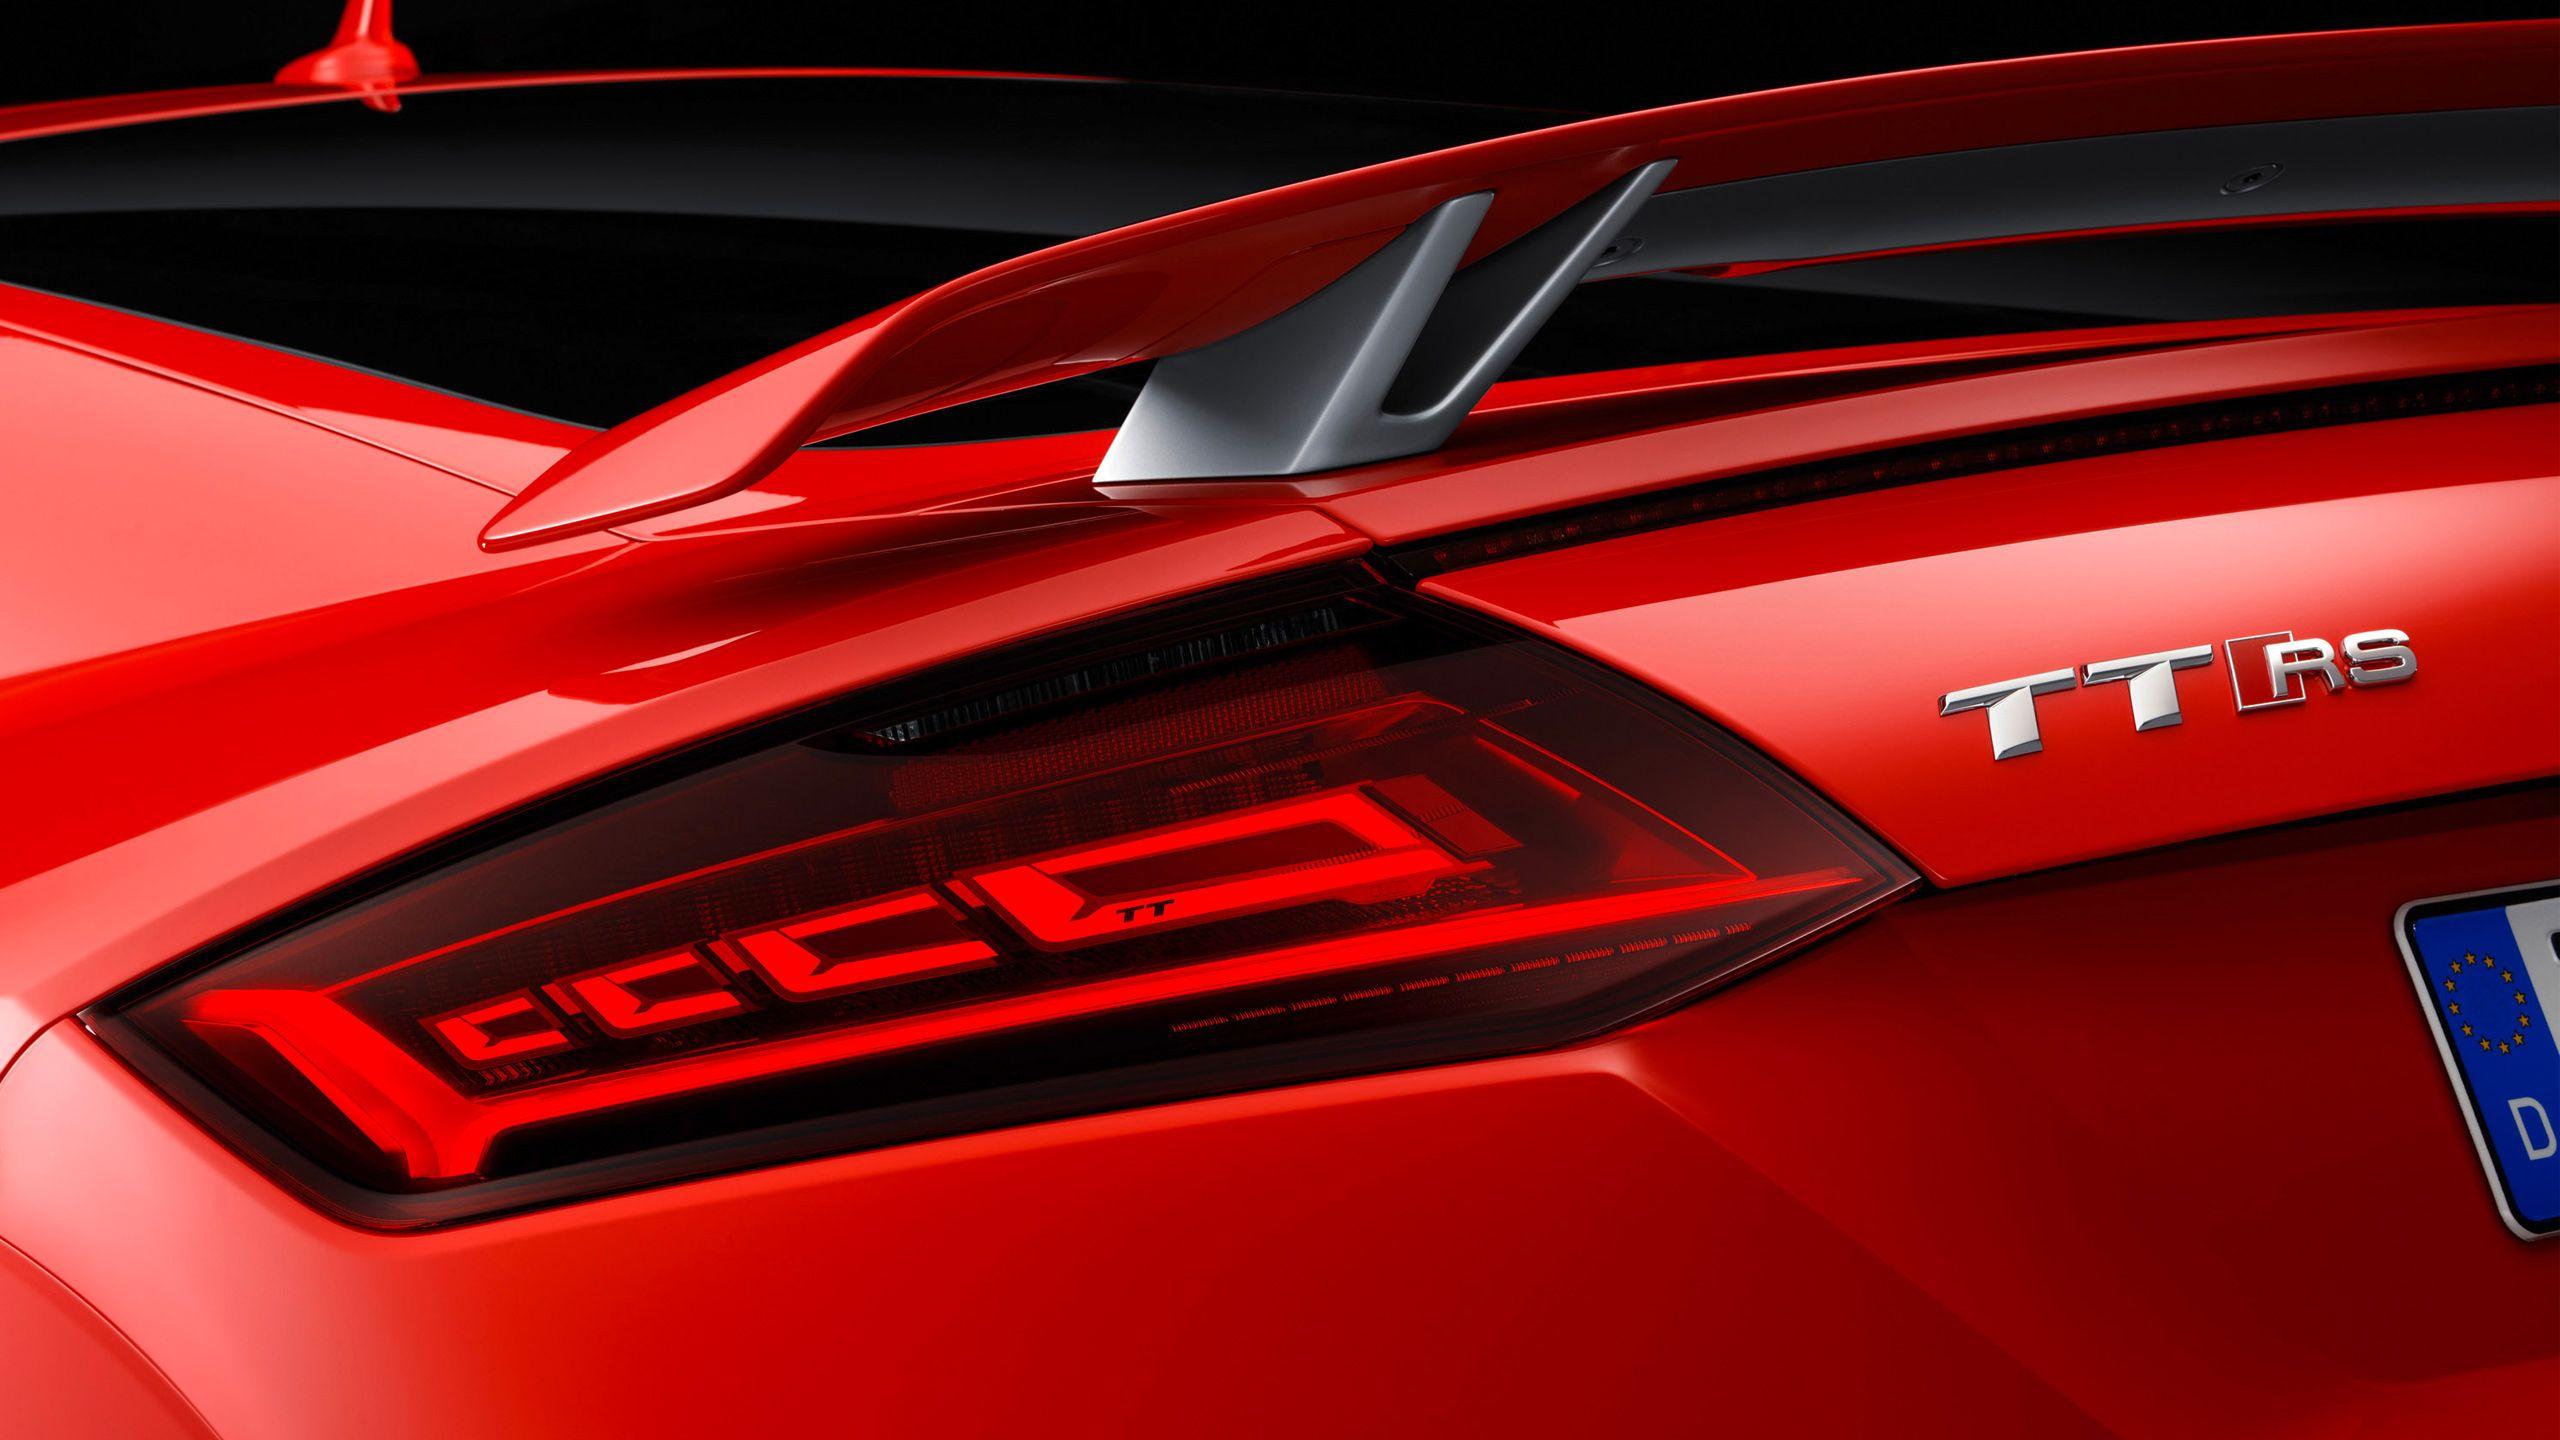 Audi TT RS Tail LED Lights Wallpaper. HD Car Wallpaper